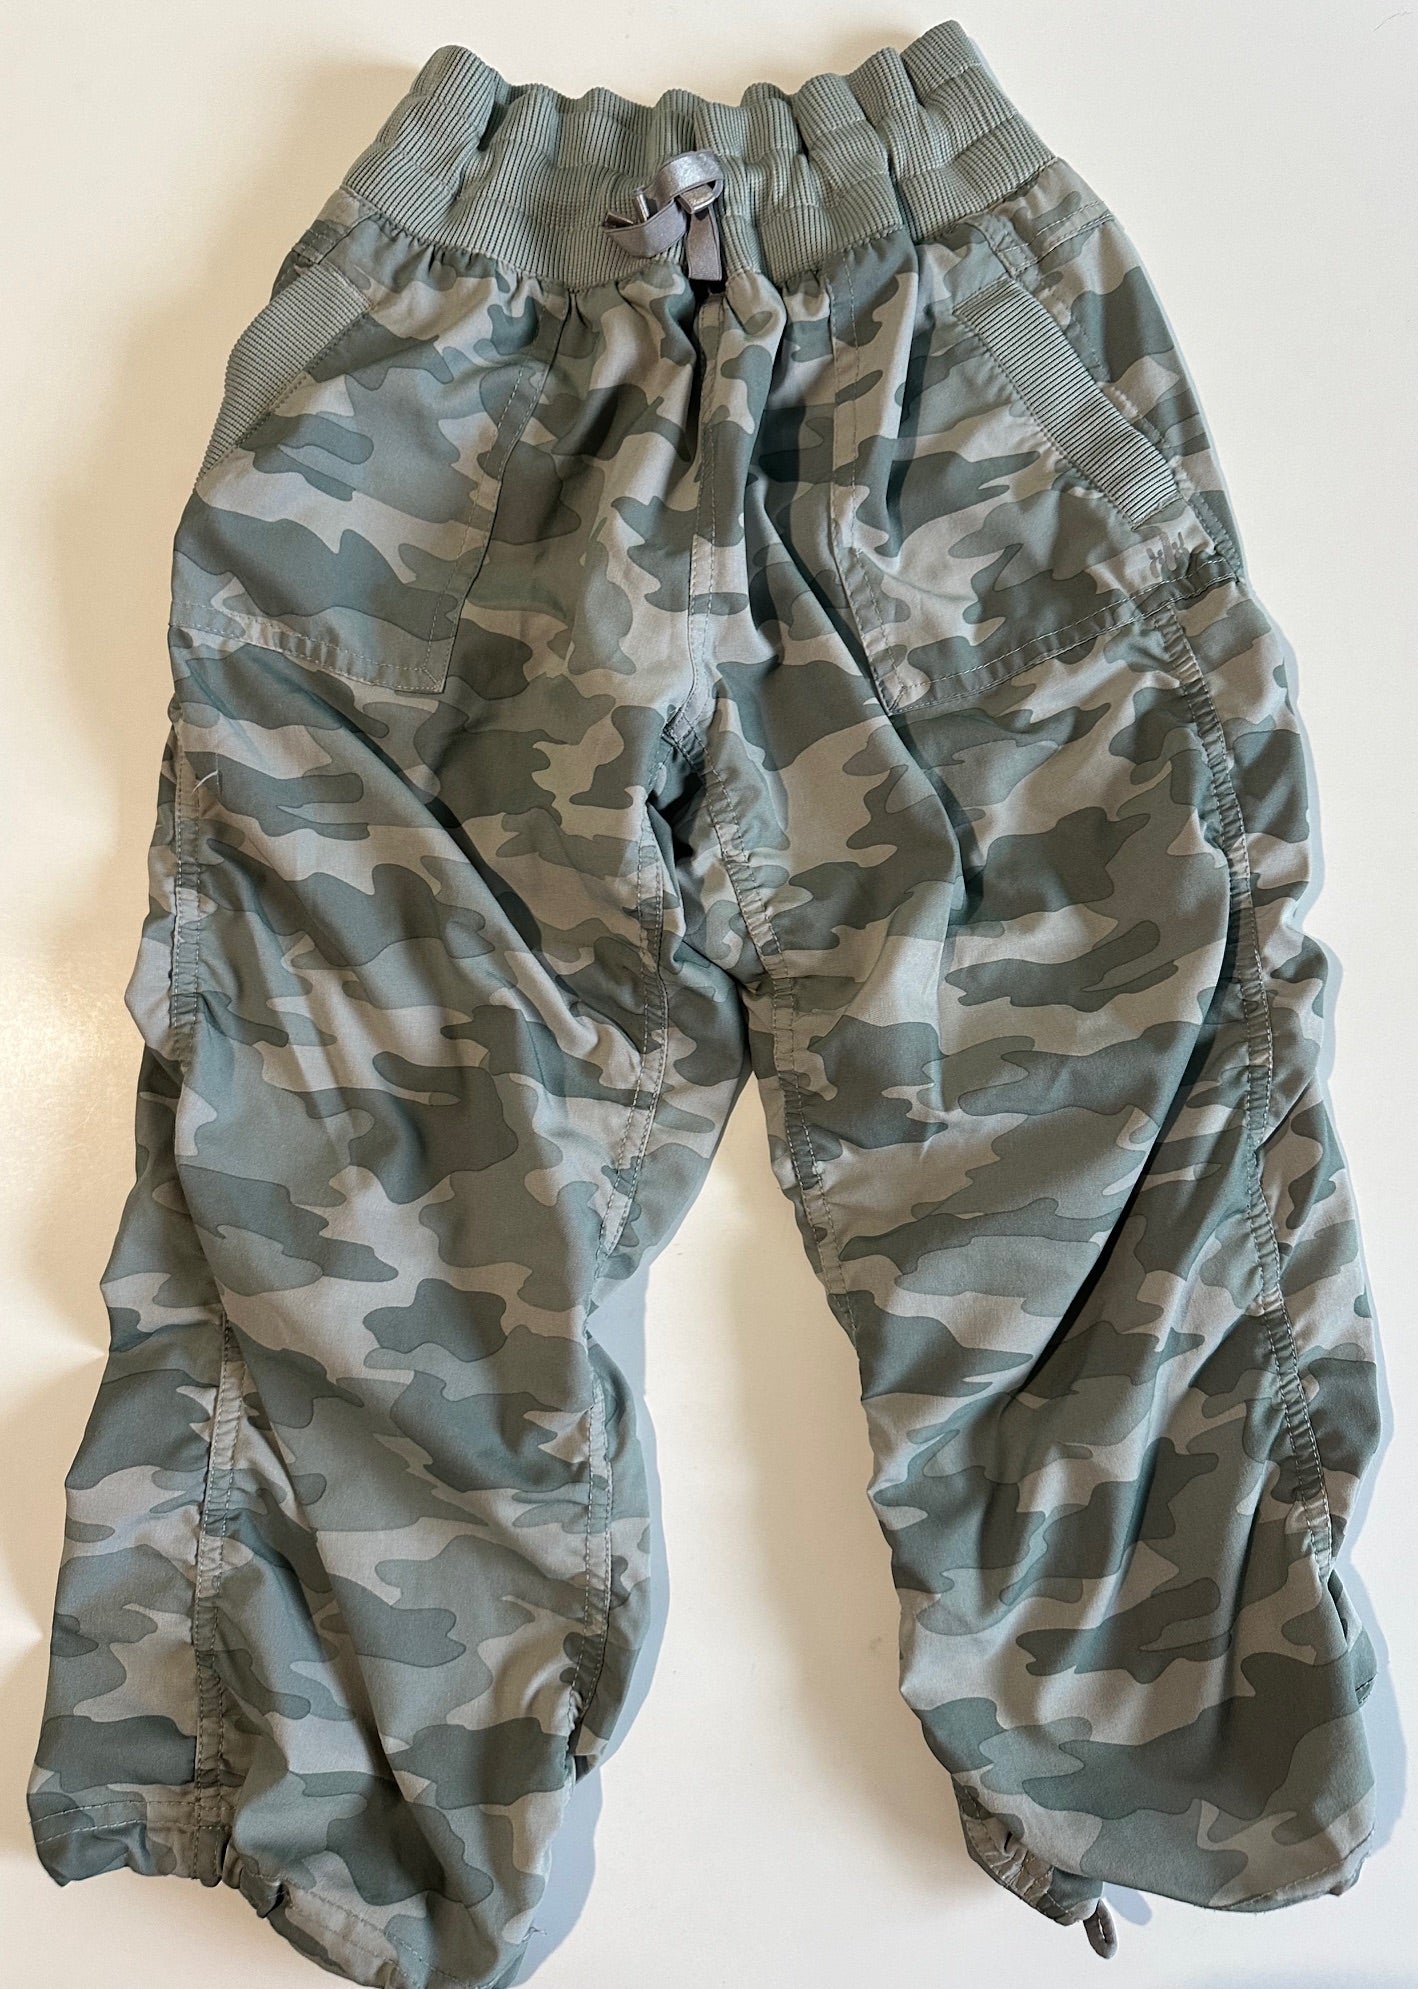 Kyodan Girls, Pale Camo Scrunchy Capri Pants - Size Medium (10/12)